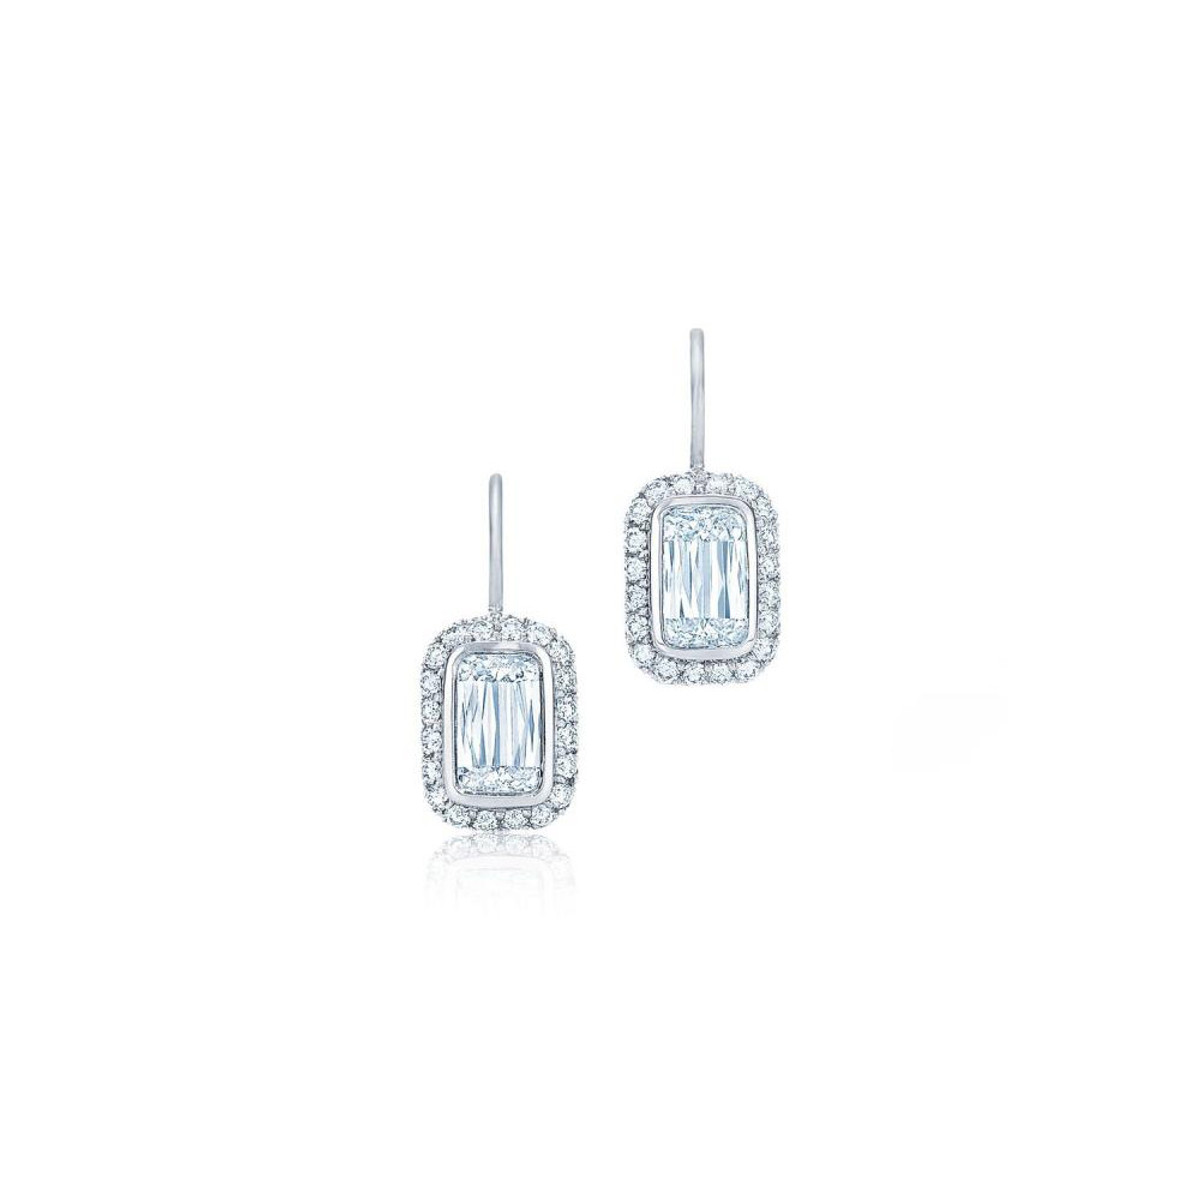 Kwiat  Ashoka Bezel Set Silhouette Diamond Earrings, 0.70 Carats Each Center Diamond Product Image